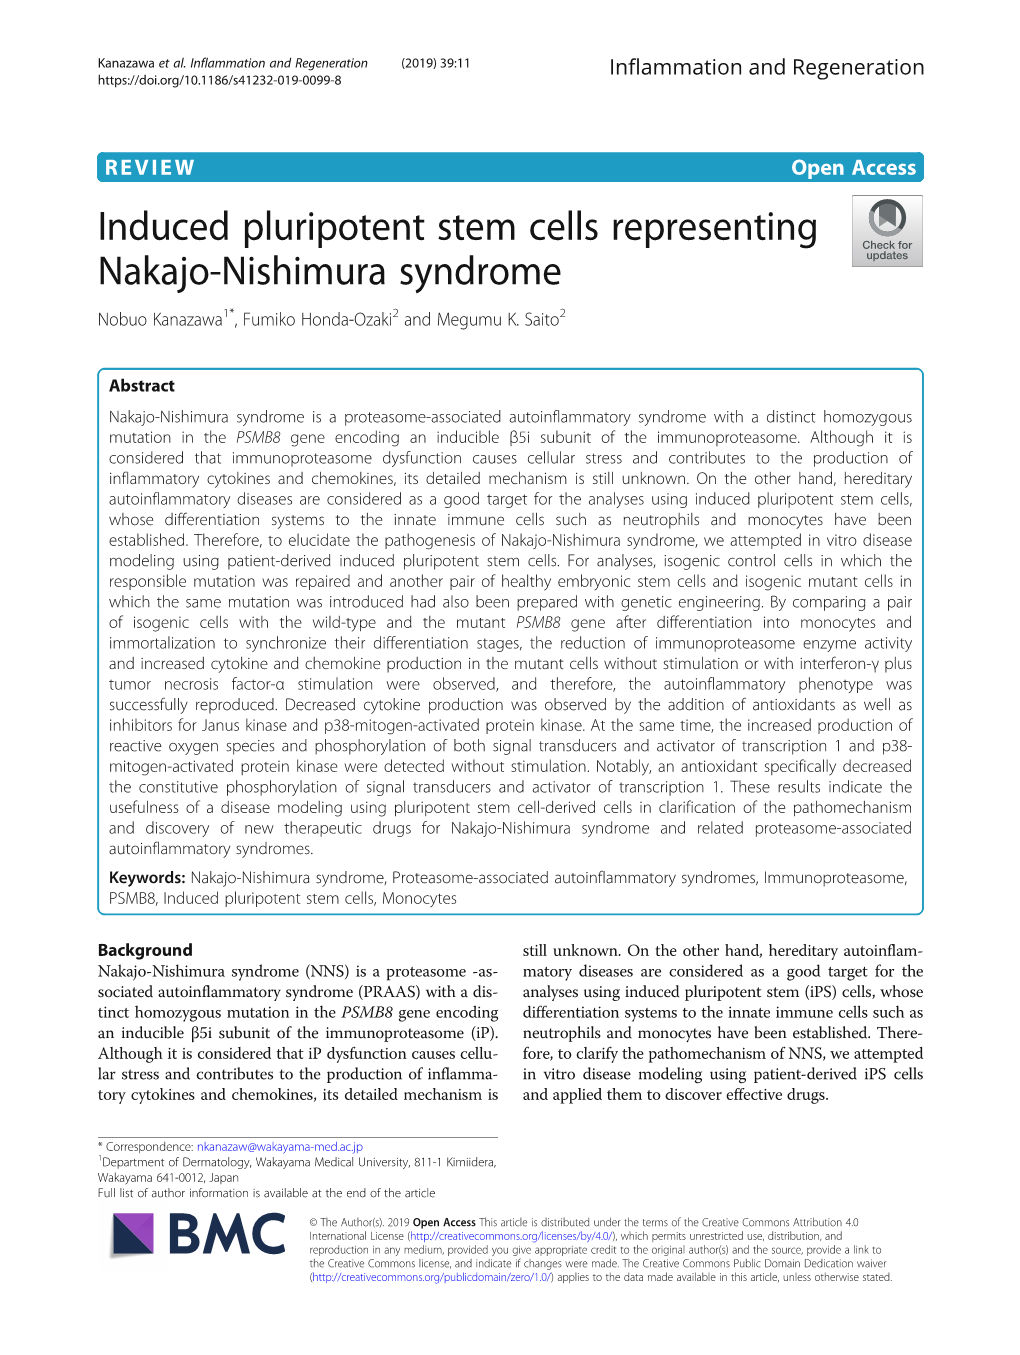 Induced Pluripotent Stem Cells Representing Nakajo-Nishimura Syndrome Nobuo Kanazawa1*, Fumiko Honda-Ozaki2 and Megumu K